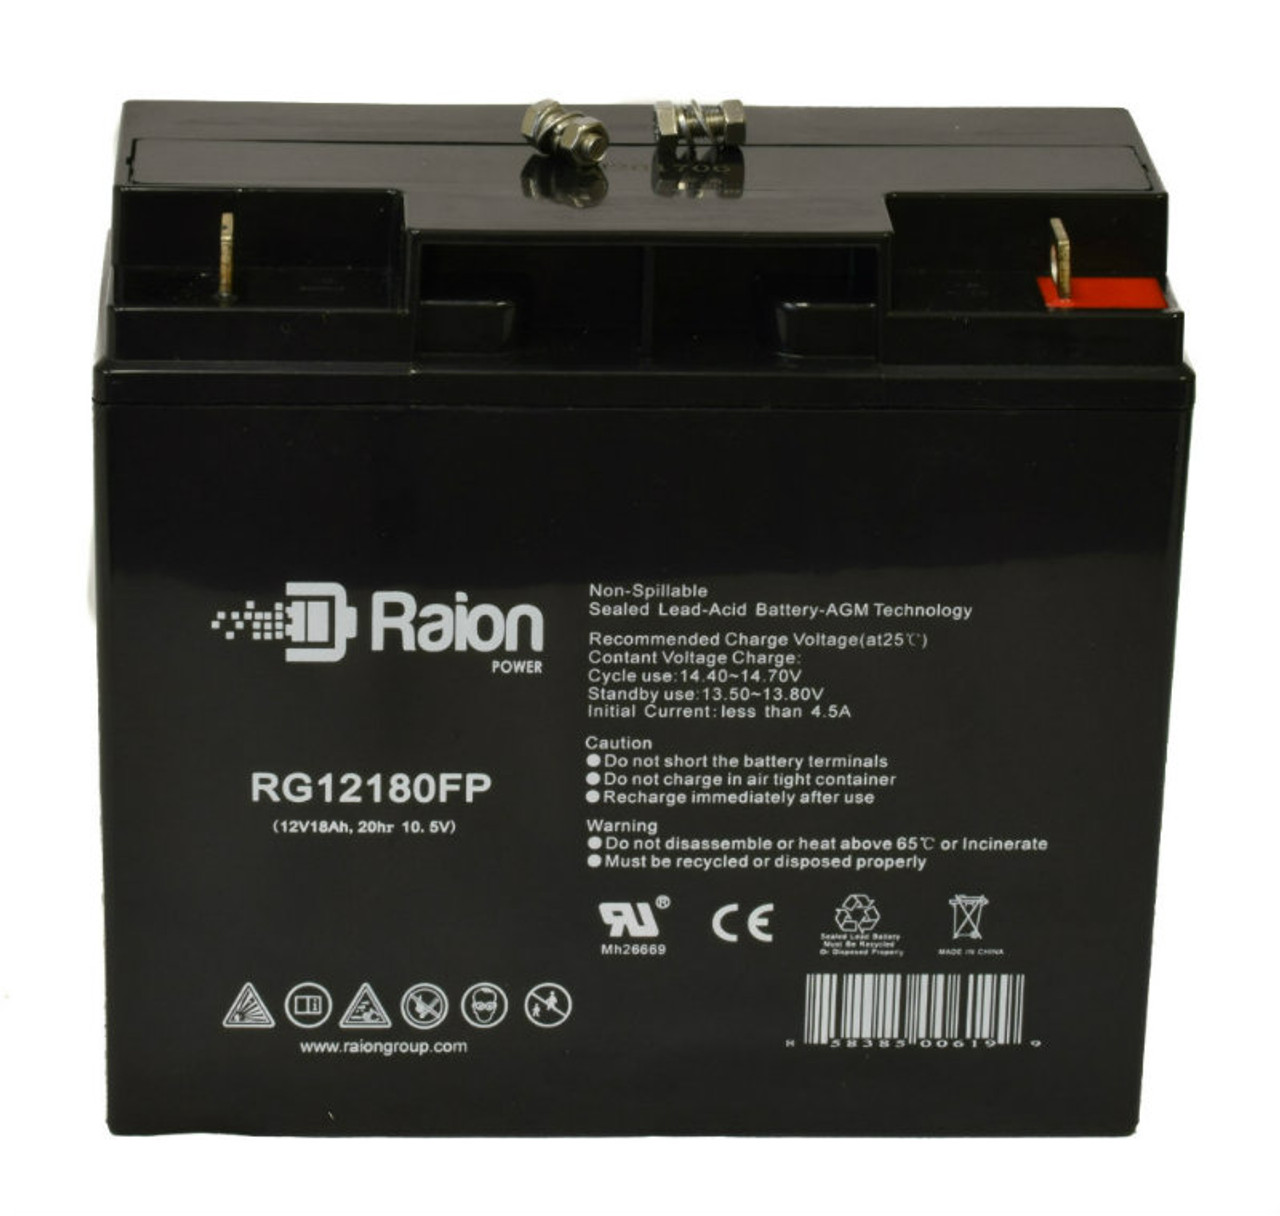 Raion Power RG12180FP 12V 18Ah Lead Acid Battery for Kypro Striker